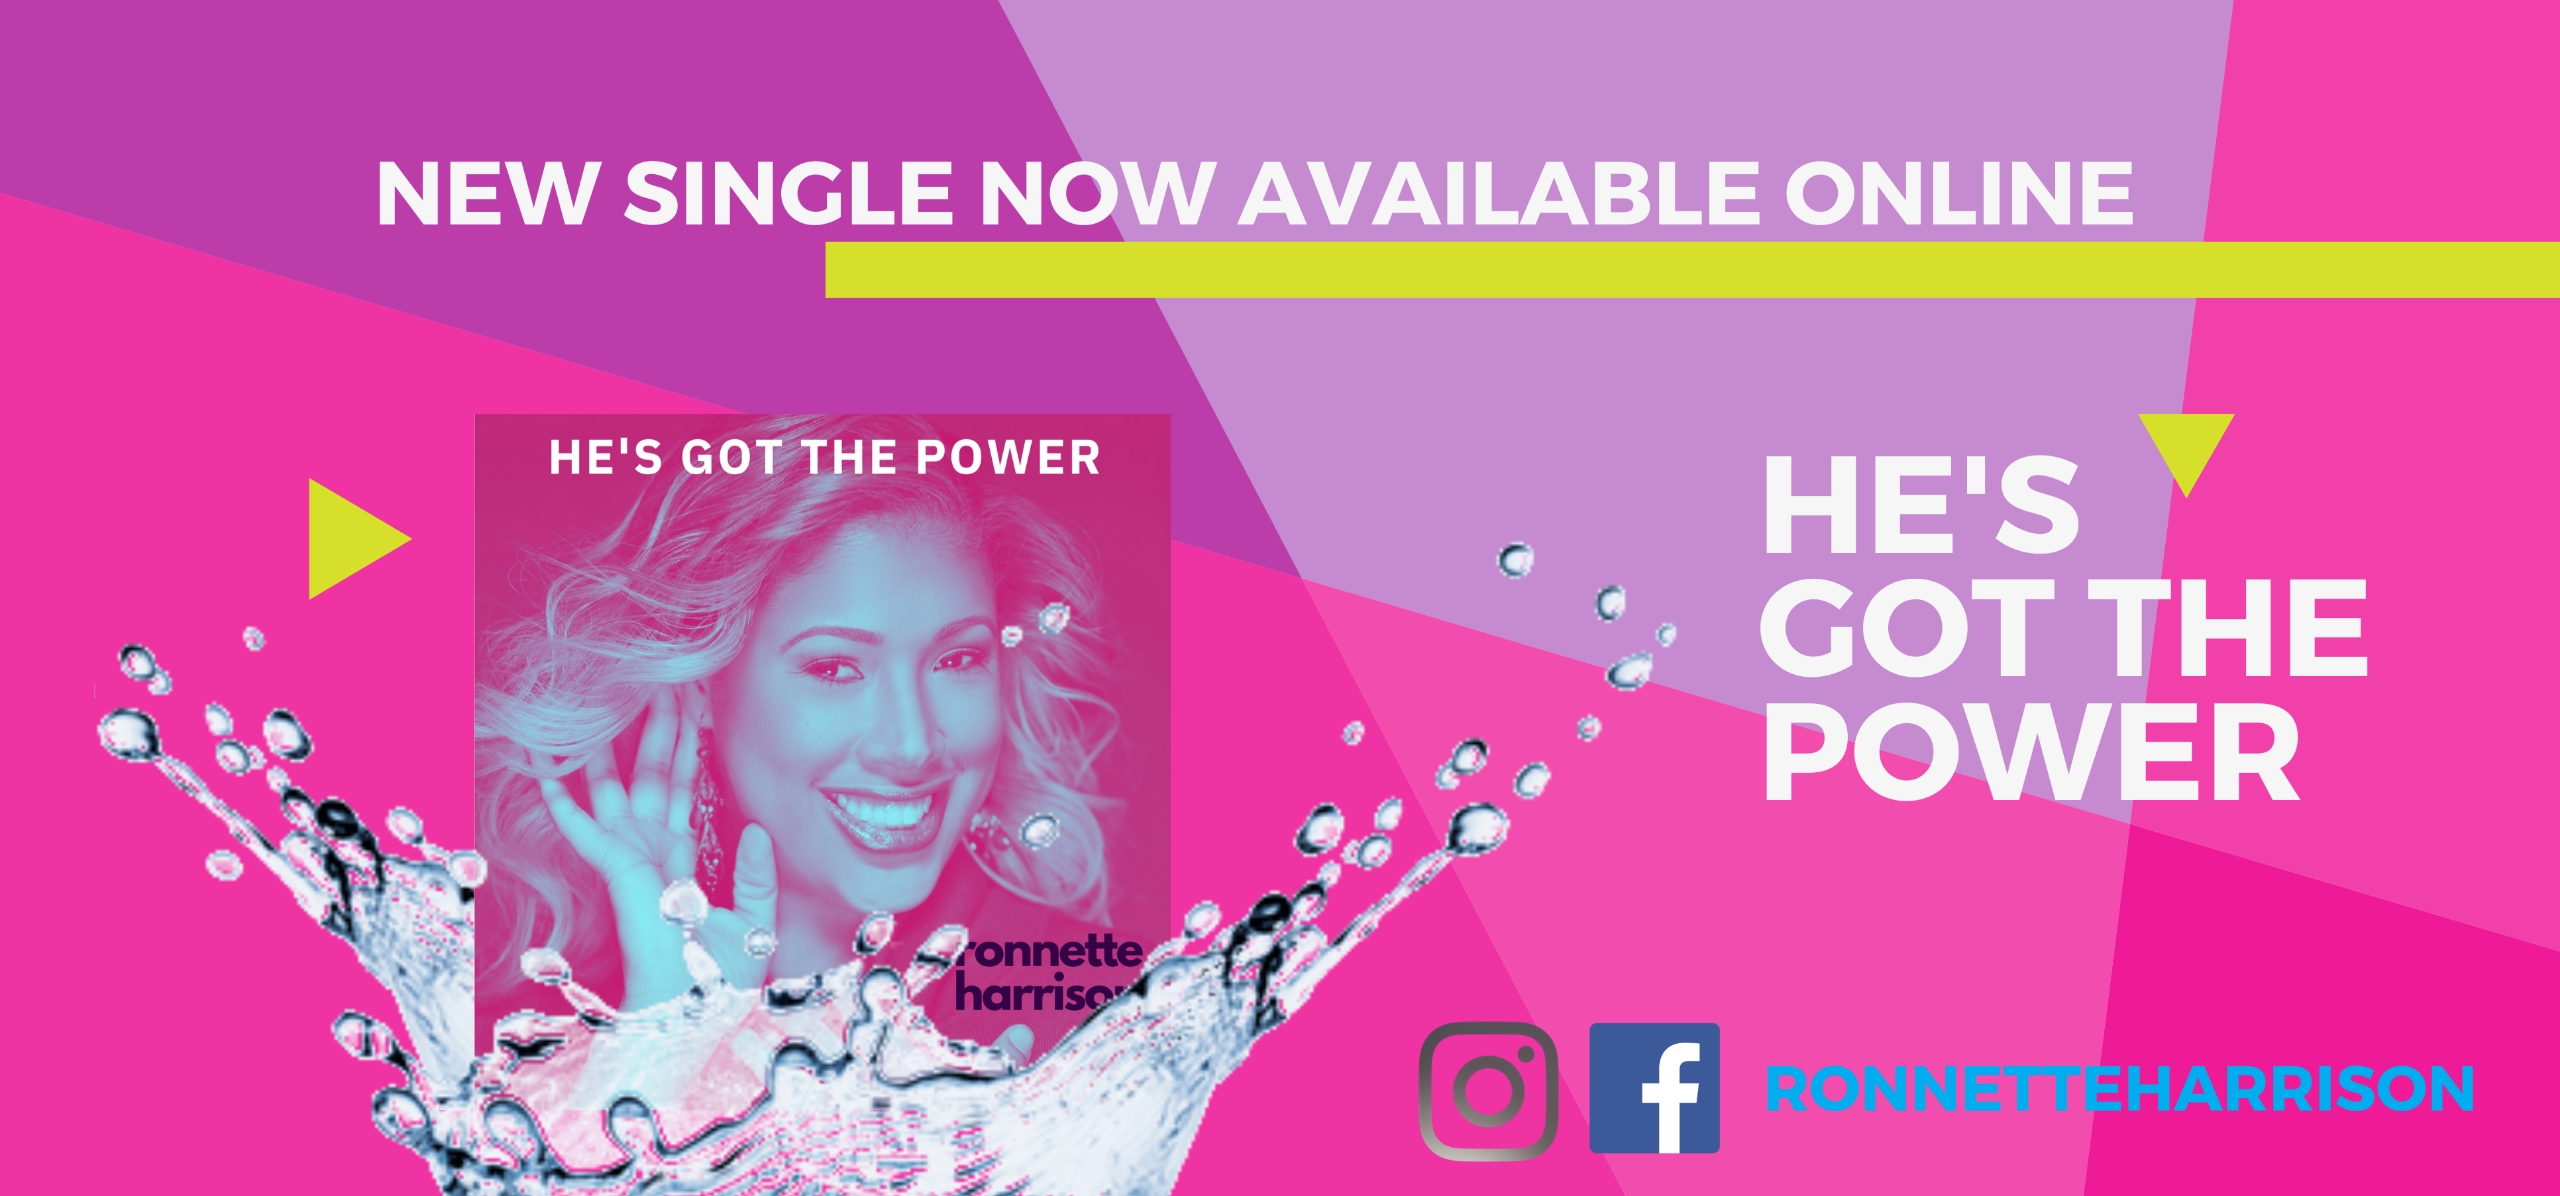 Ronnette Harrison "He's Got the Power"